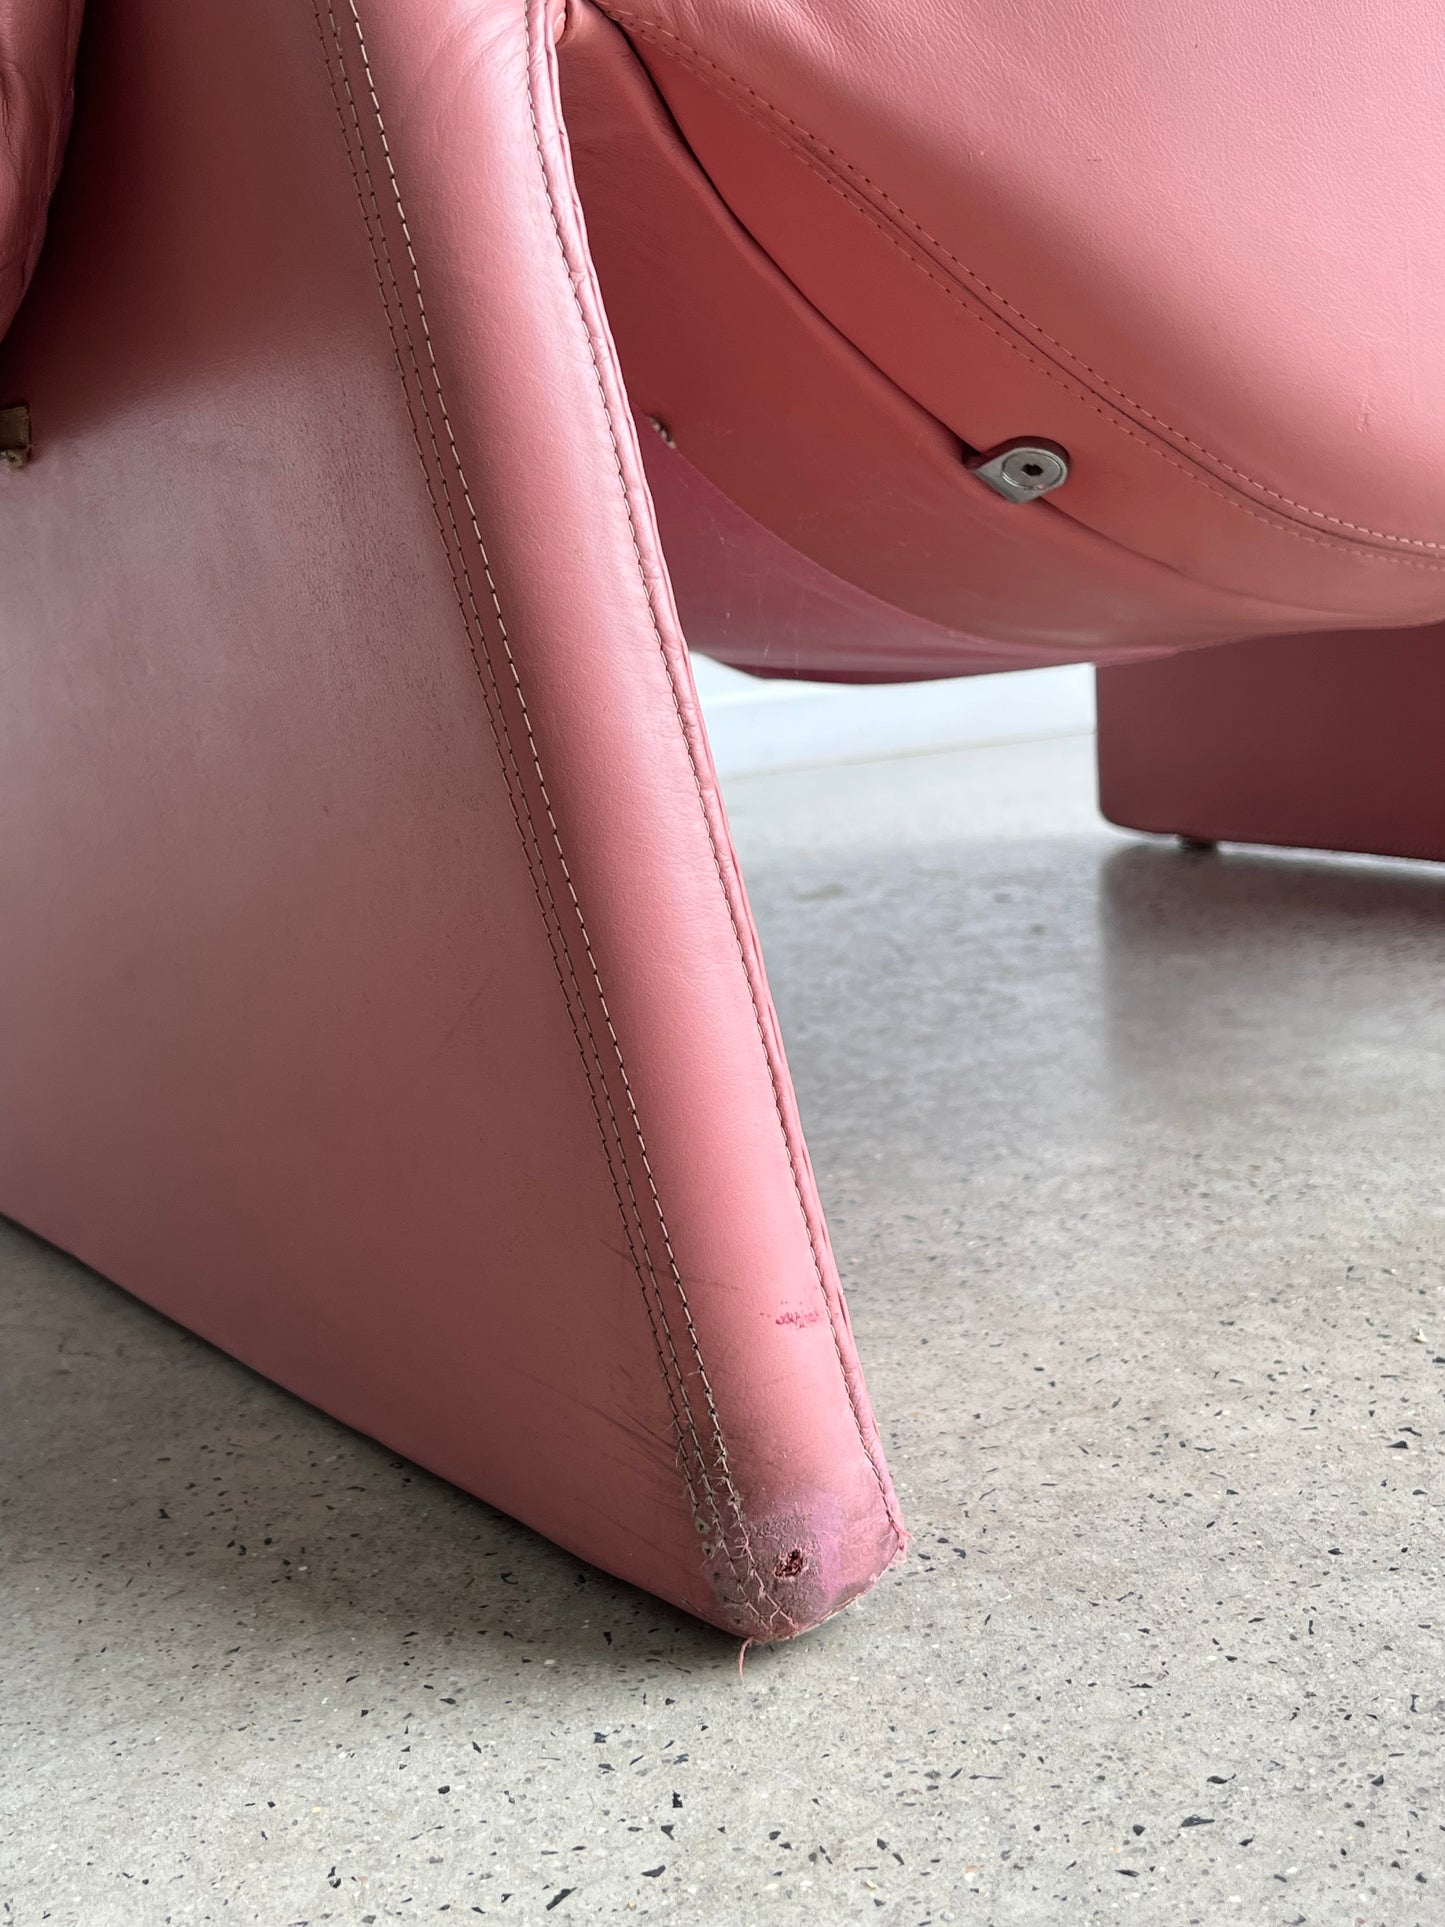 "P60" by Vittorio Introini for Saporiti Italia, Pink Leather Chair, 1962